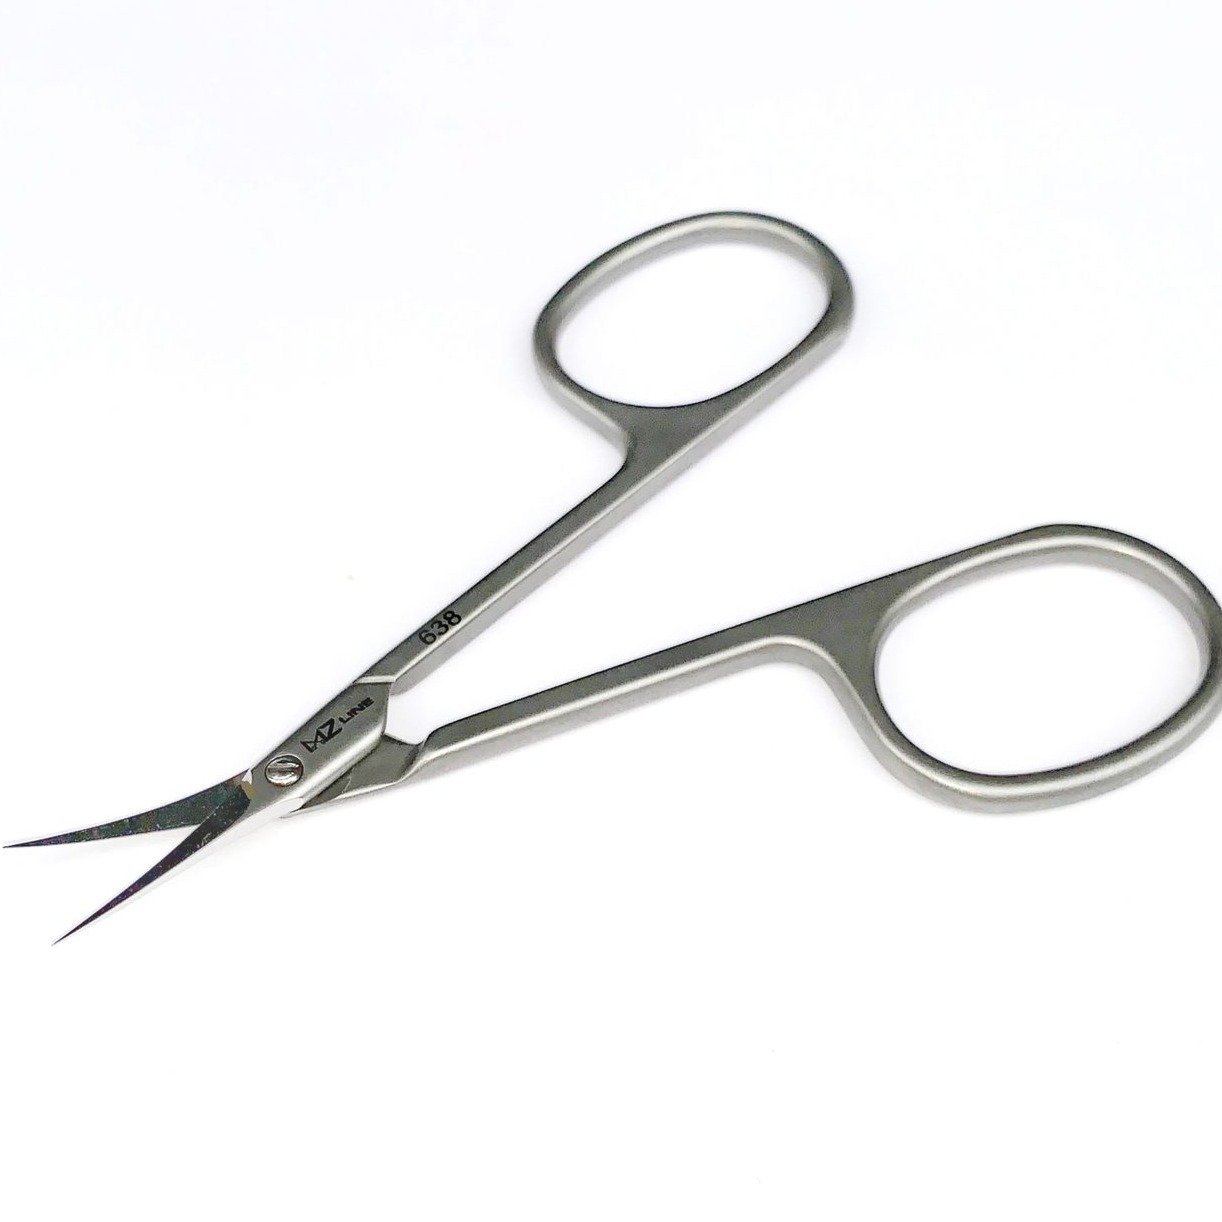 Mertz Professional Cuticle Nail Scissors - Model 638 - Nail Mart USA